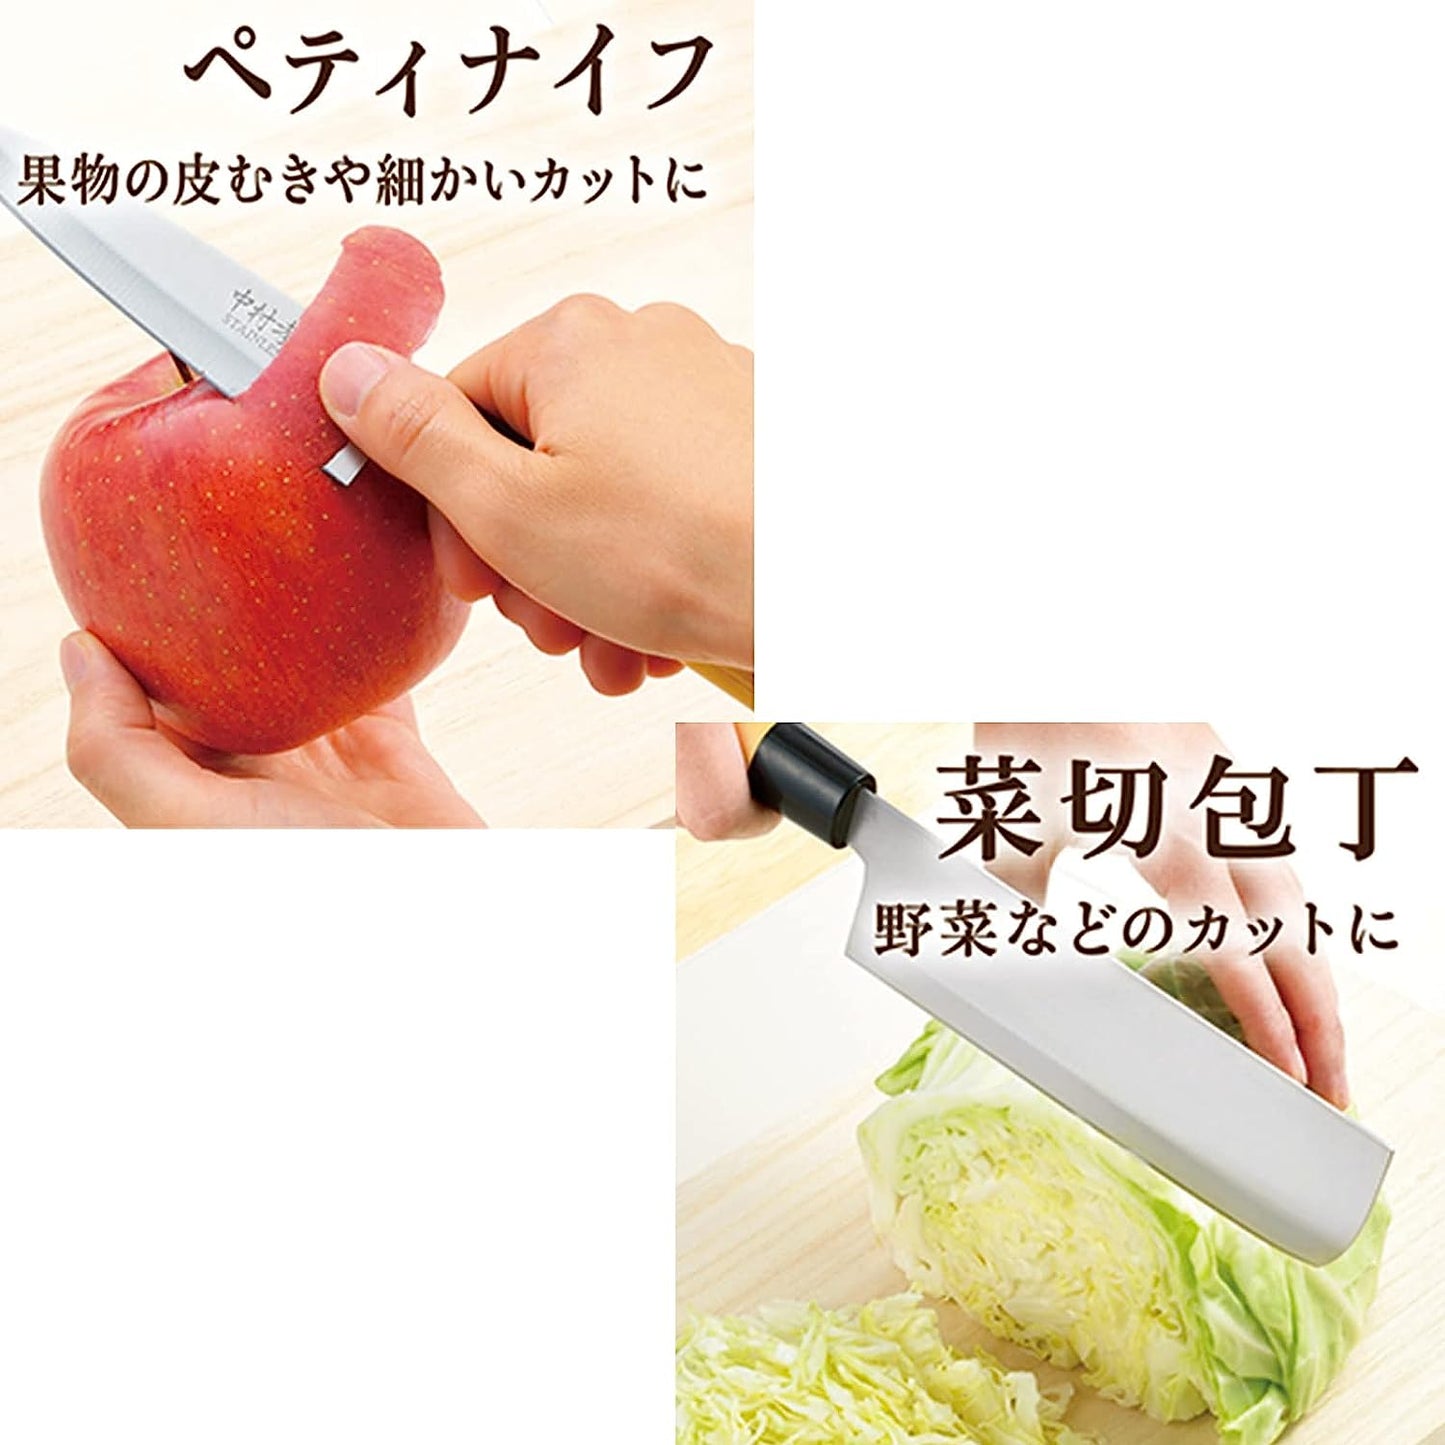 Kakuse Koumei Nakamua Japanese Knife Set of 5 2019 New Ver